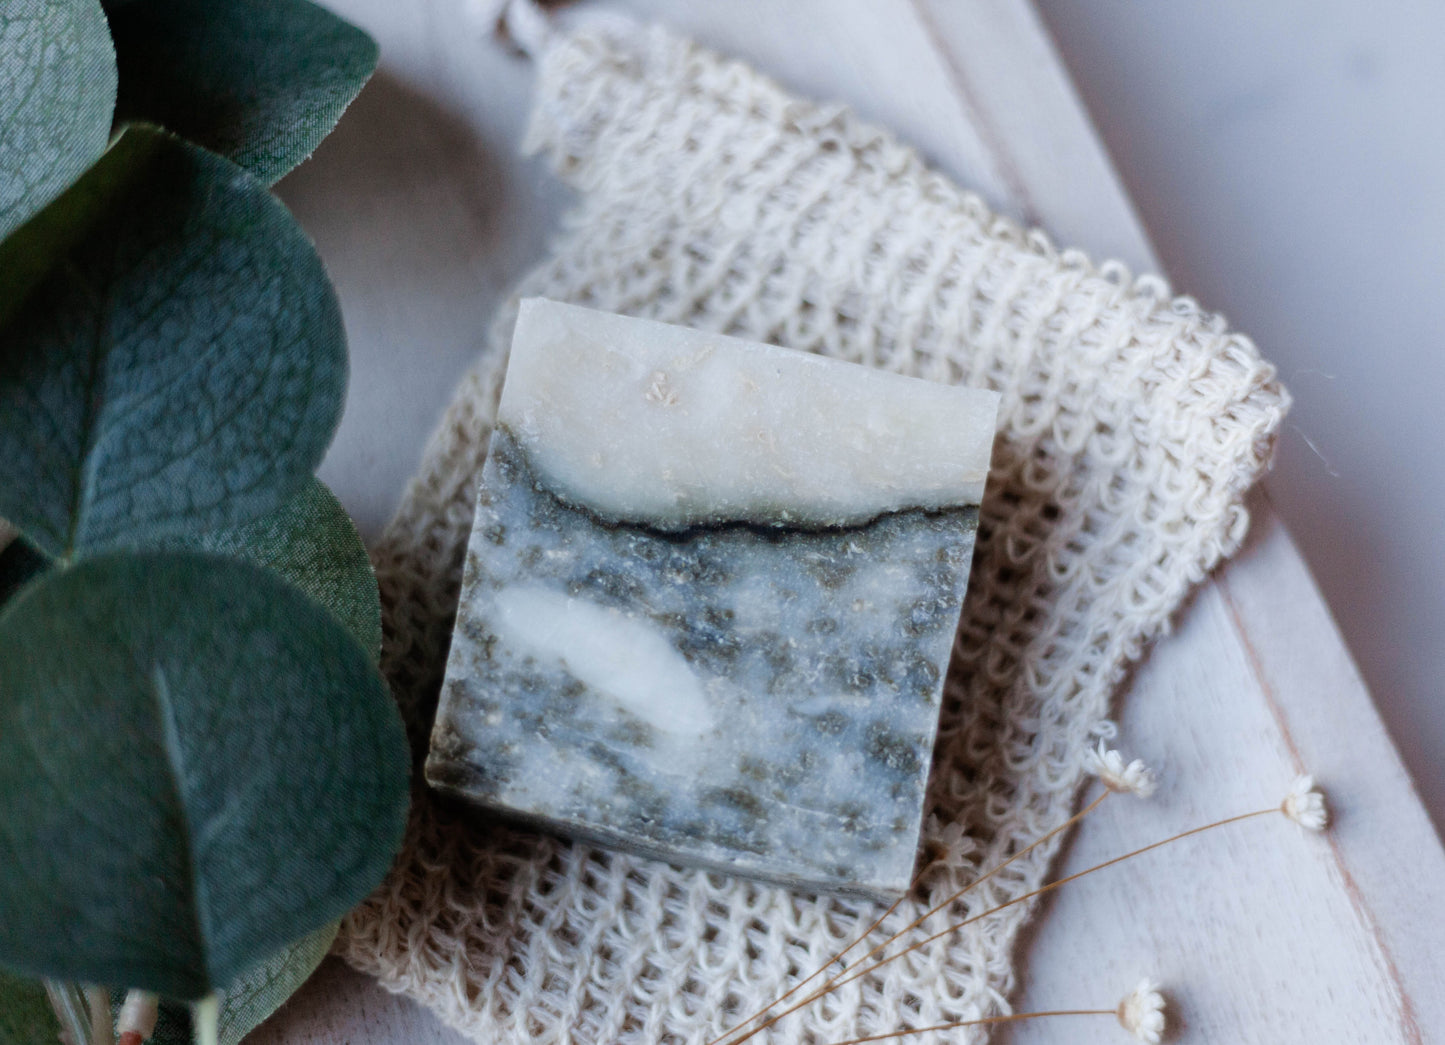 Eucalyptus Mint Hot Process Soap